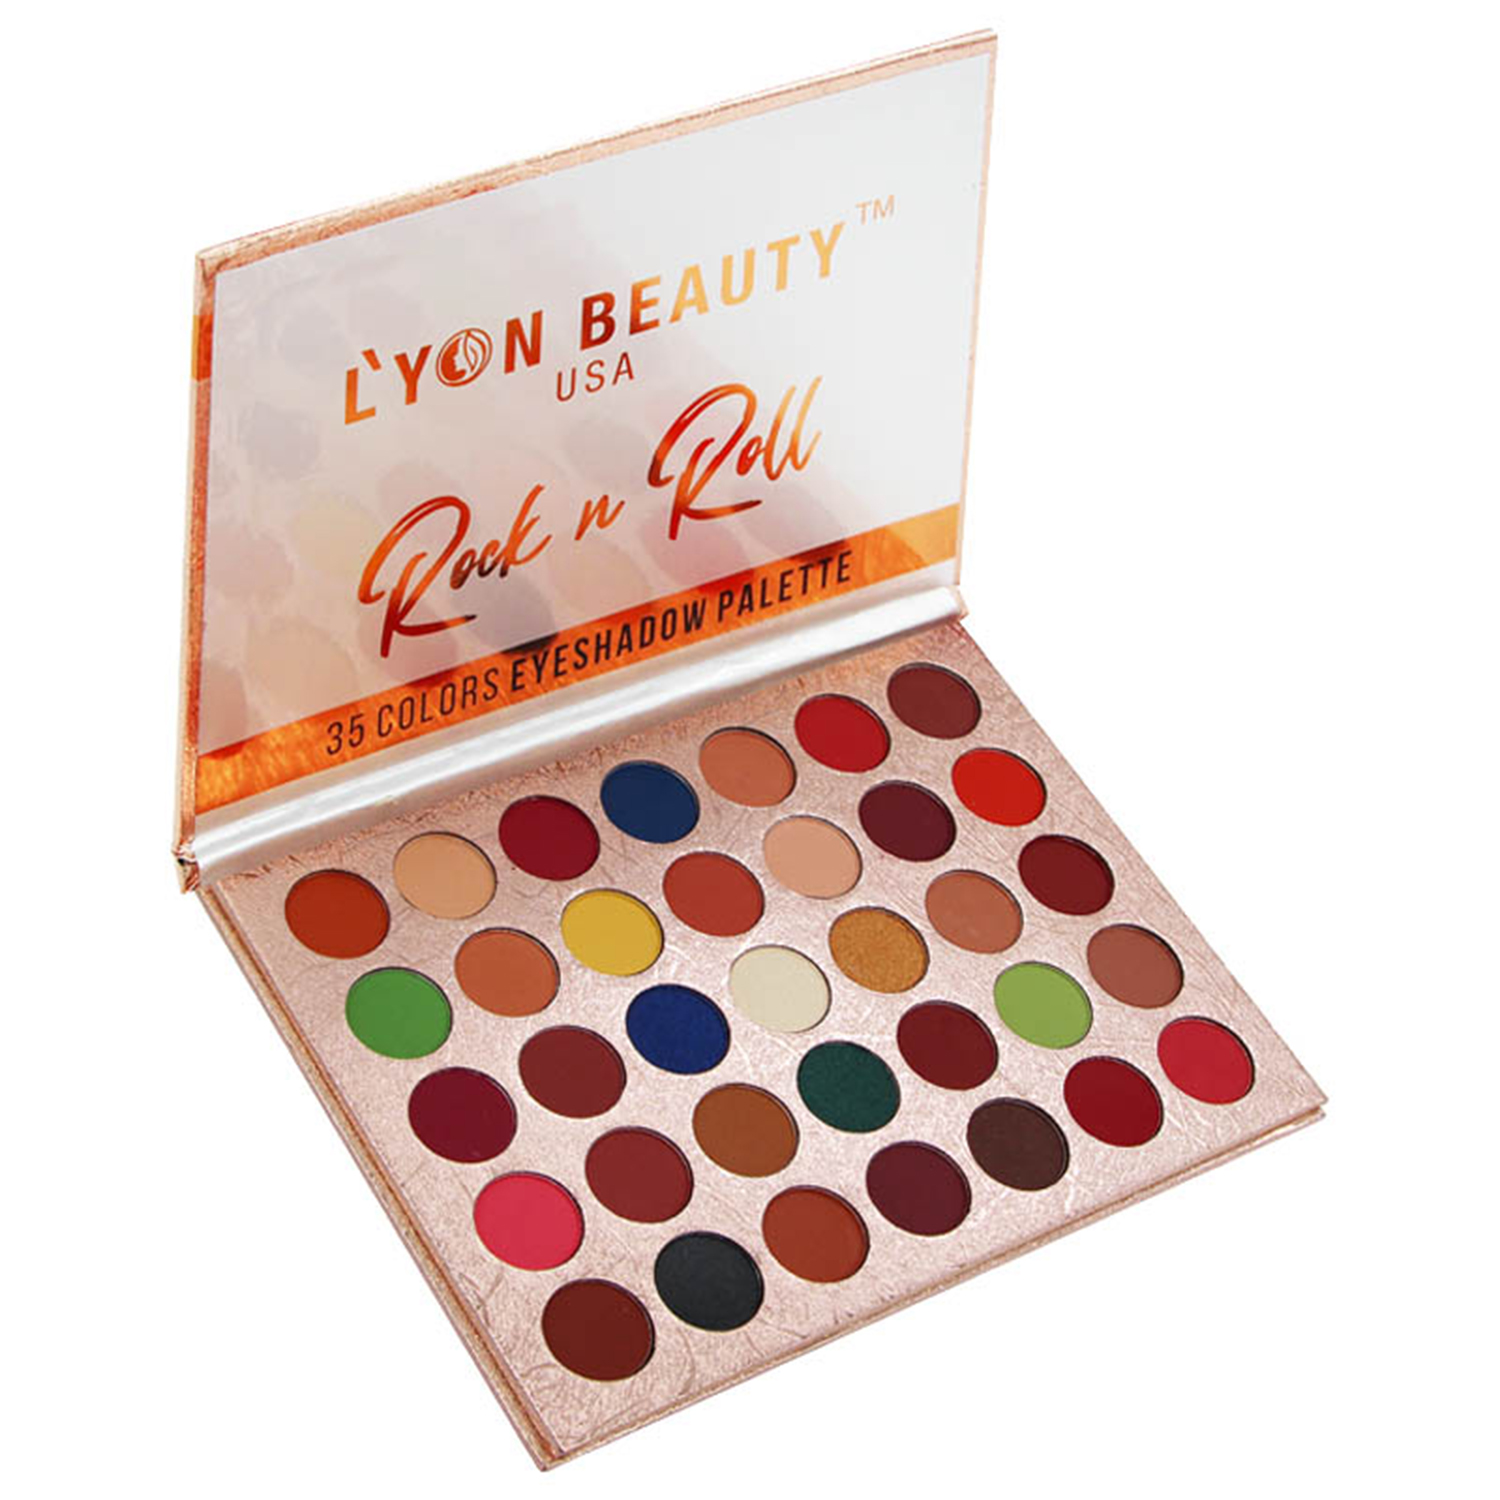 Lyon Beauty USA Rock N Roll 35 Colors Eyeshadow Palette, 1gm-Shade 01